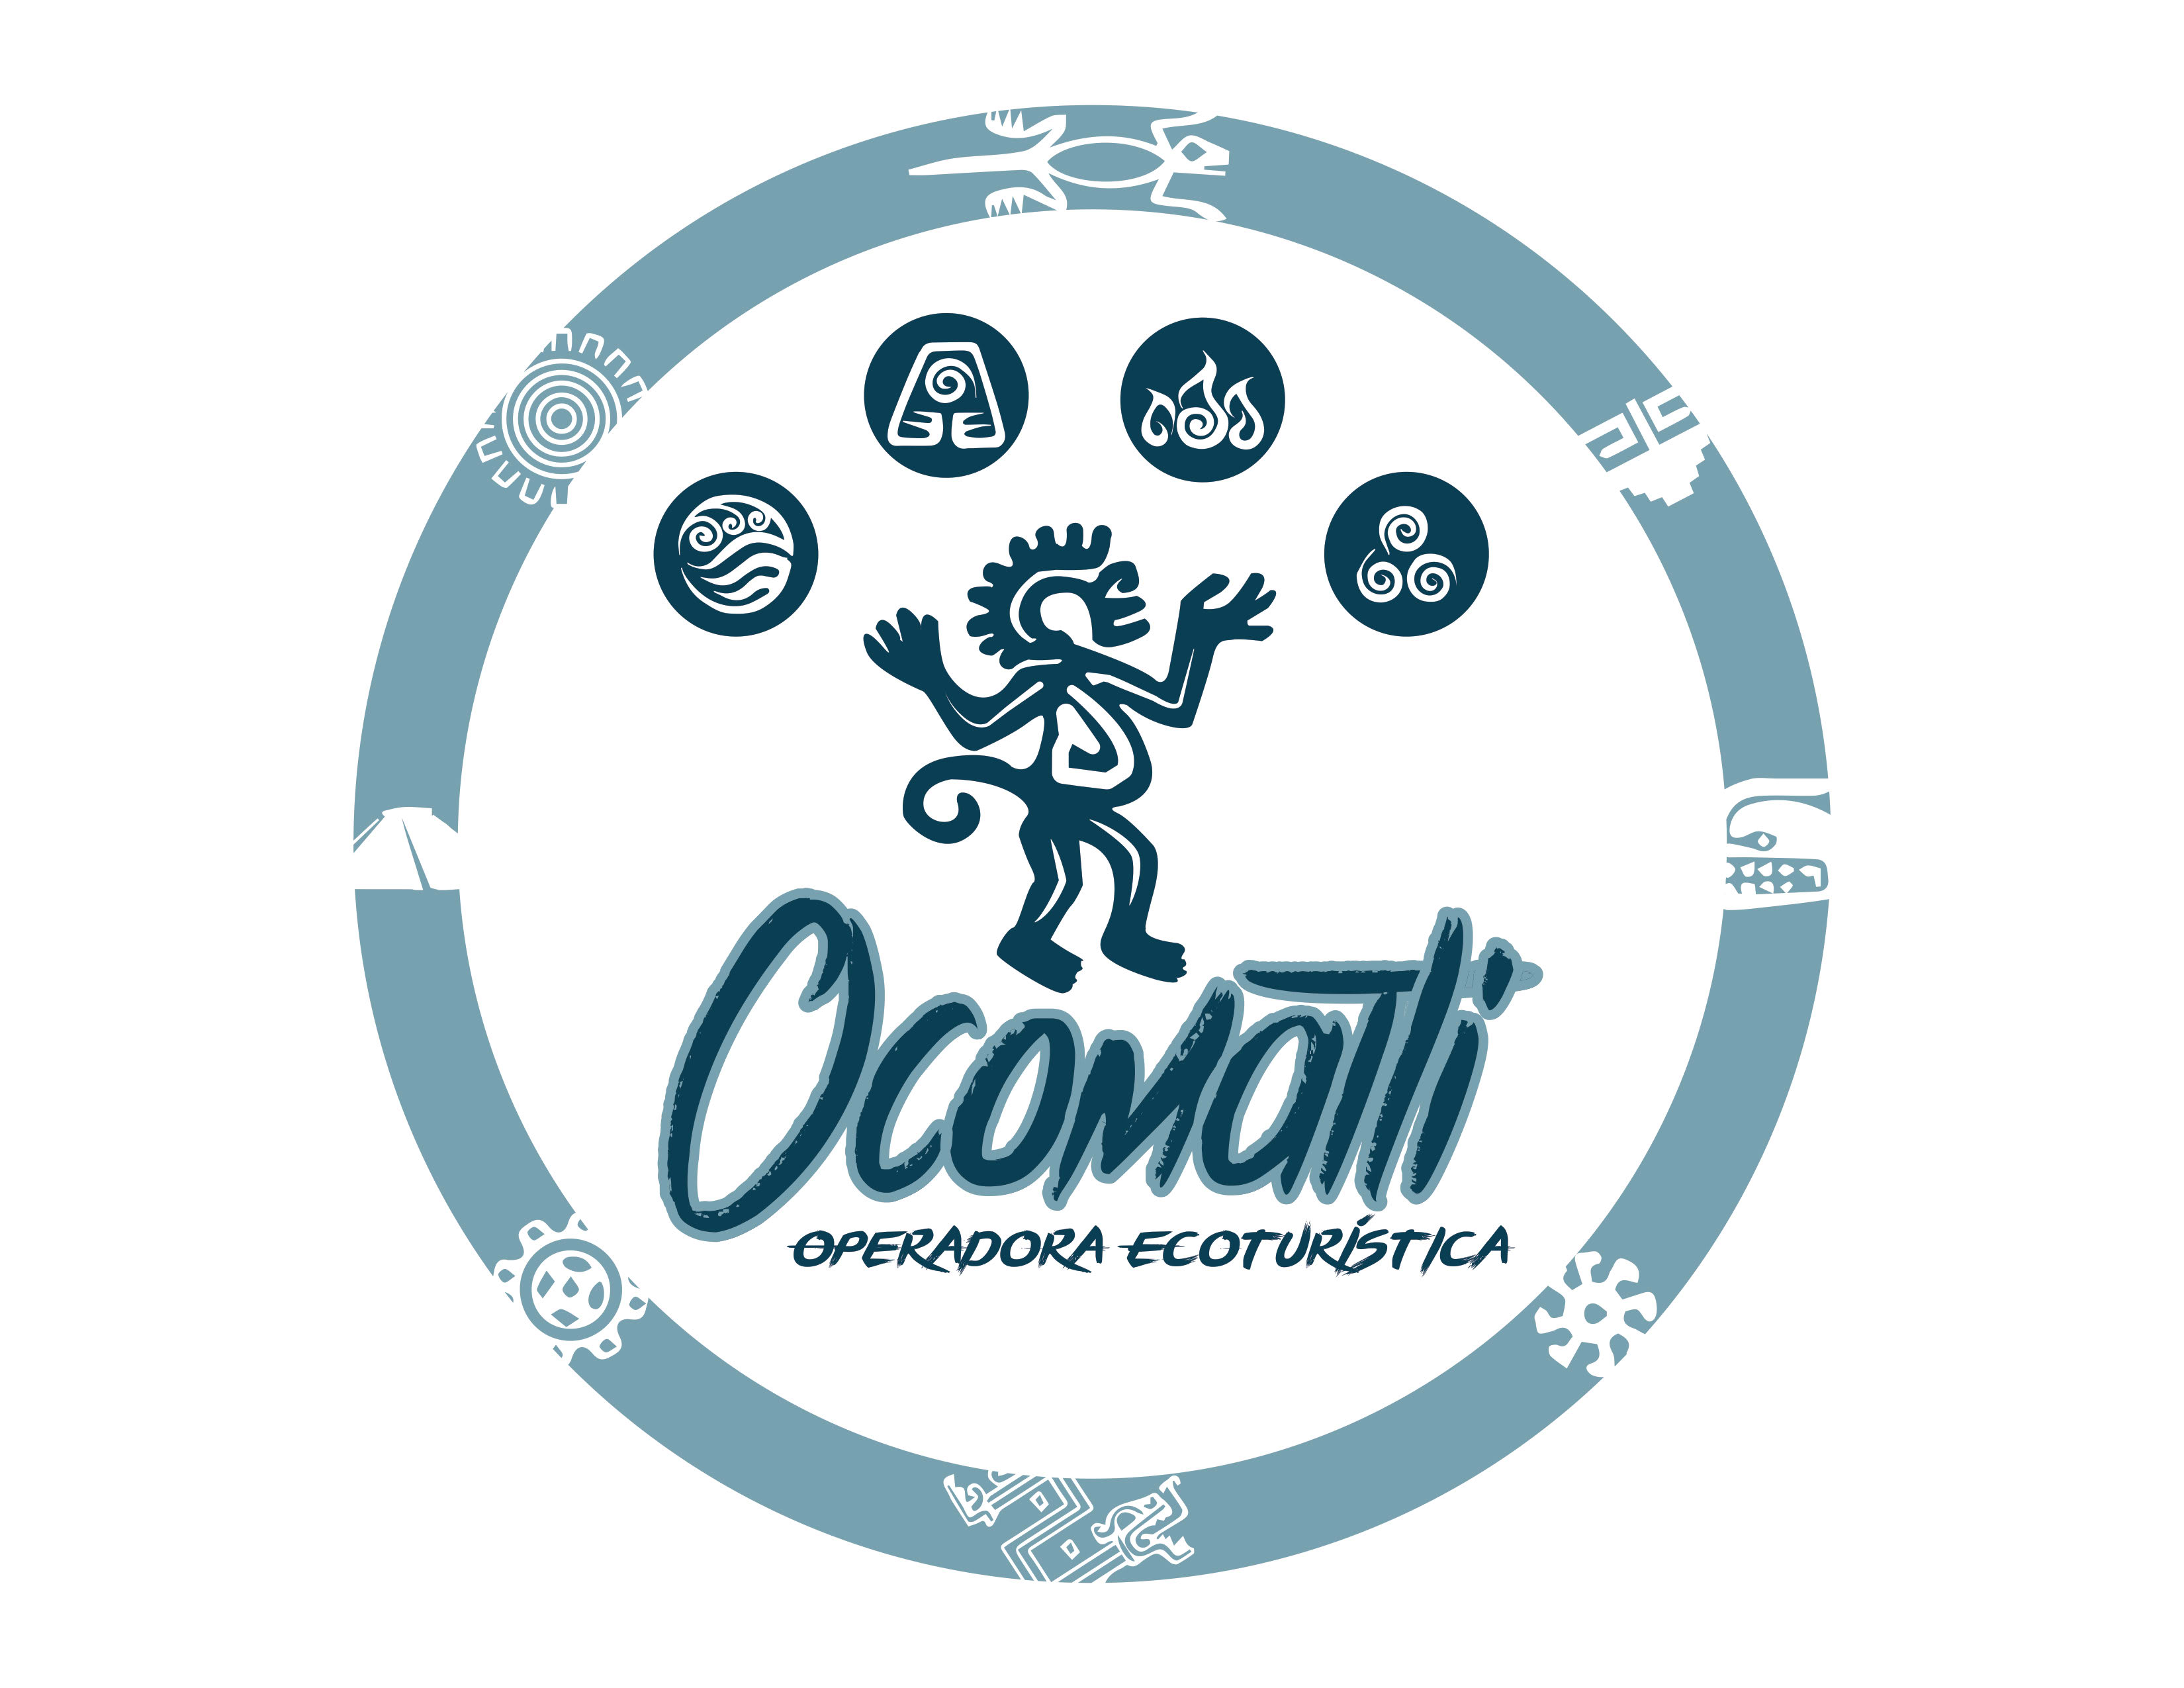 Operadora Ecoturistica Ocomatli